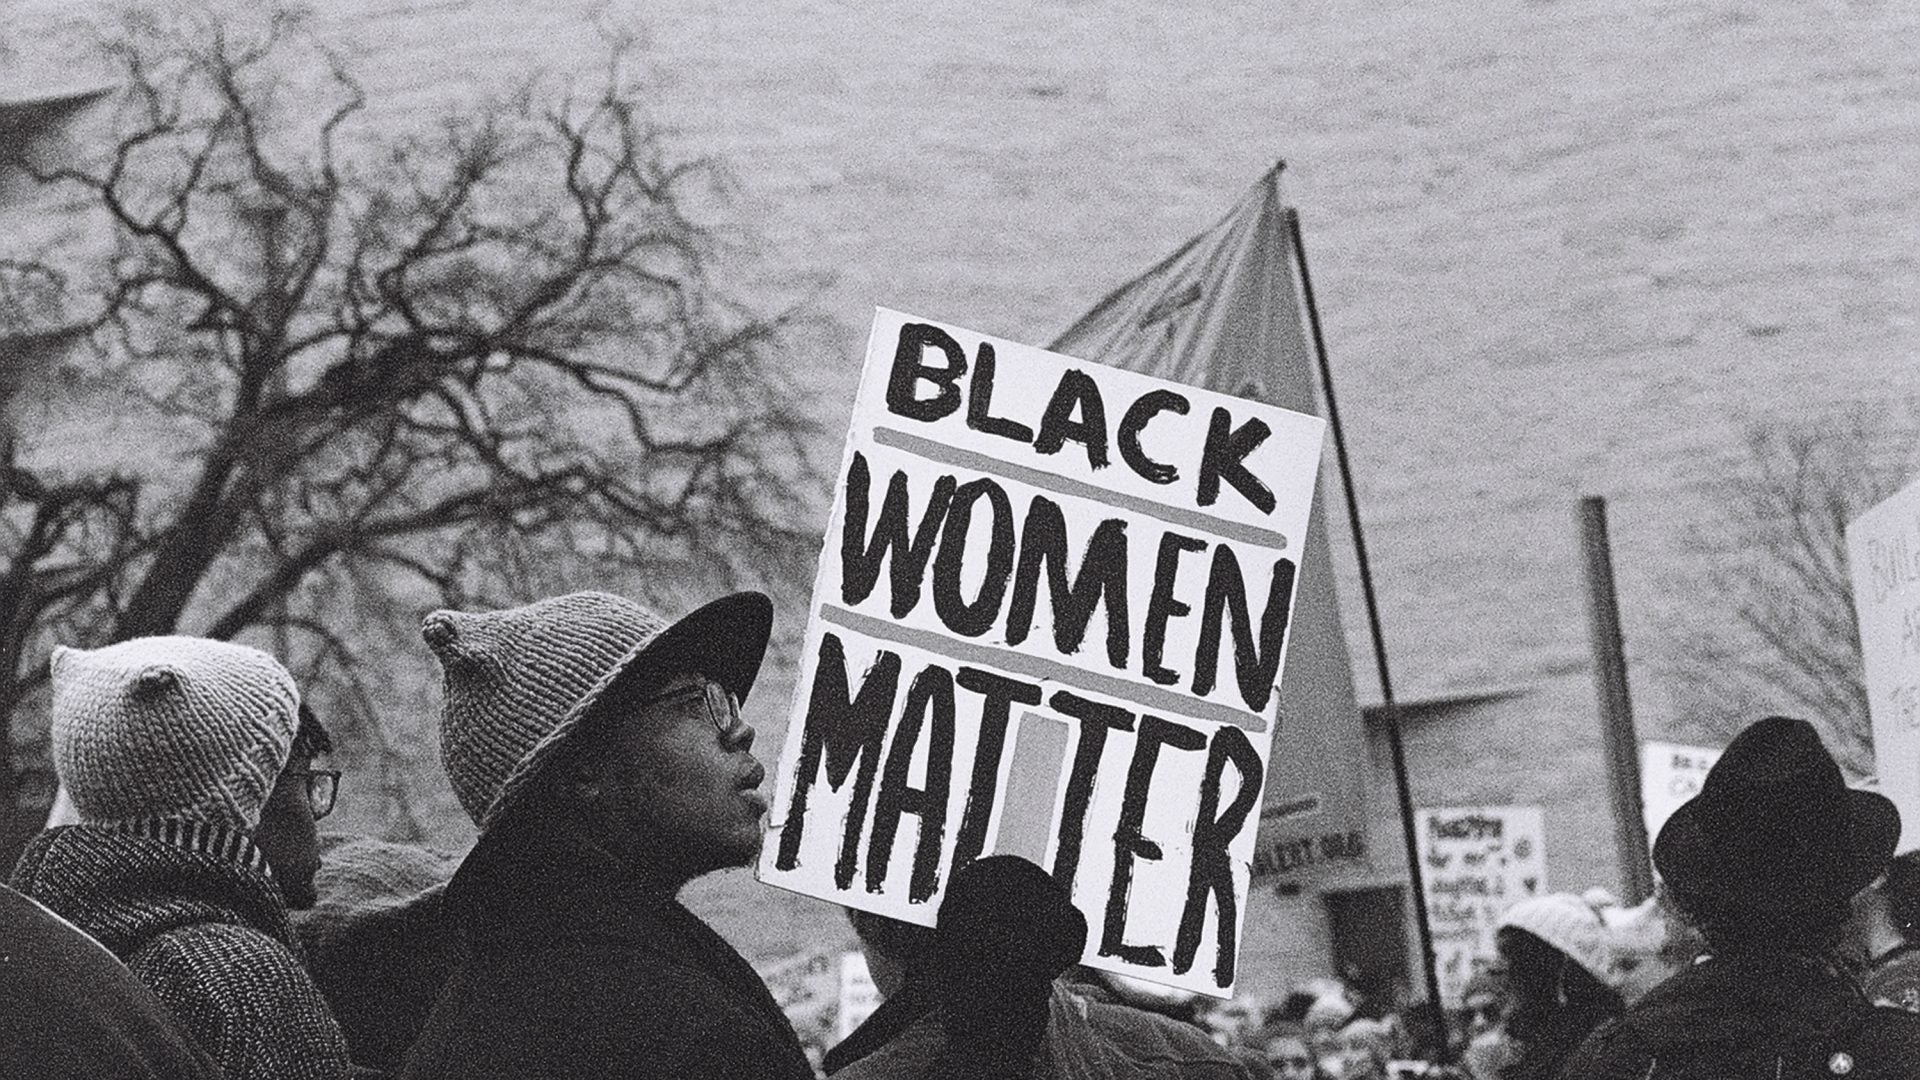 NMAAHC’s ‘Forces For Change’ Exhibition Explores Black Women’s Activism